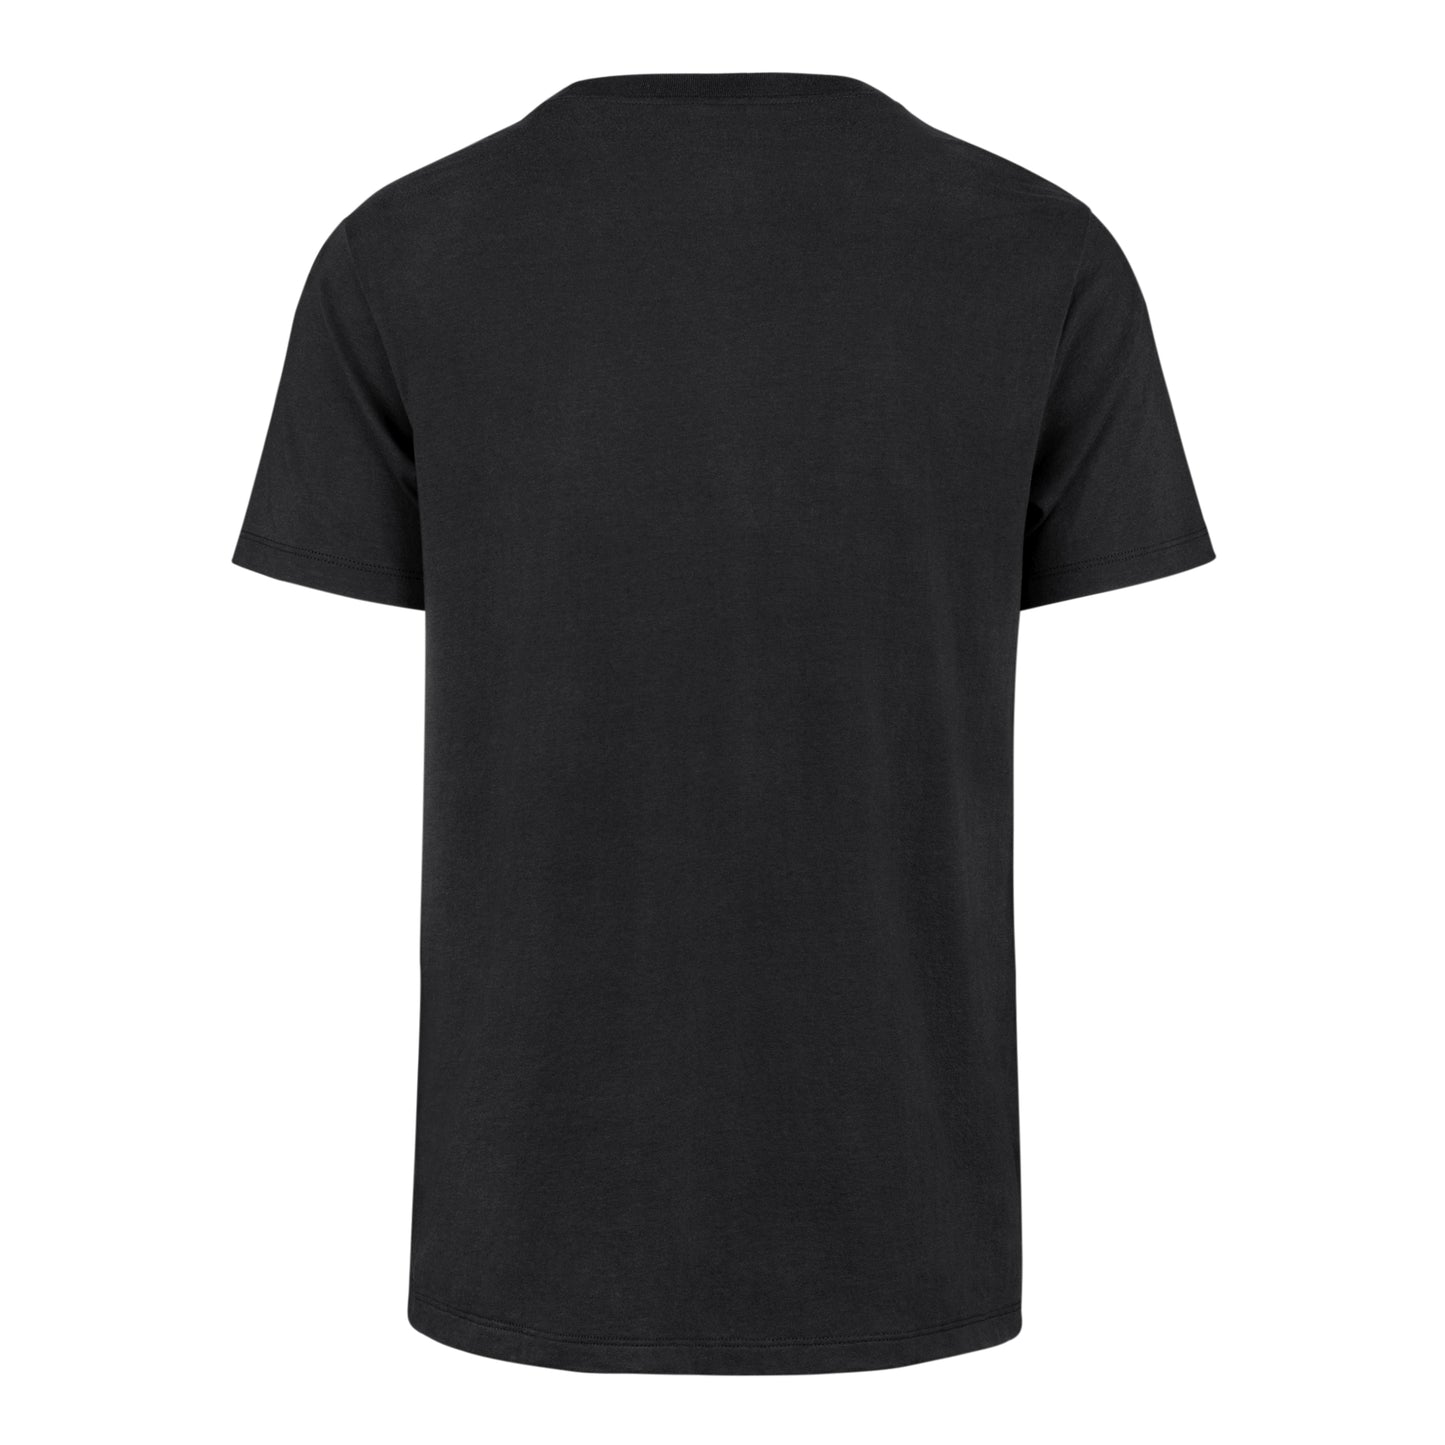 Chicago White Sox Half Batterman Logo Black Flint T-Shirt